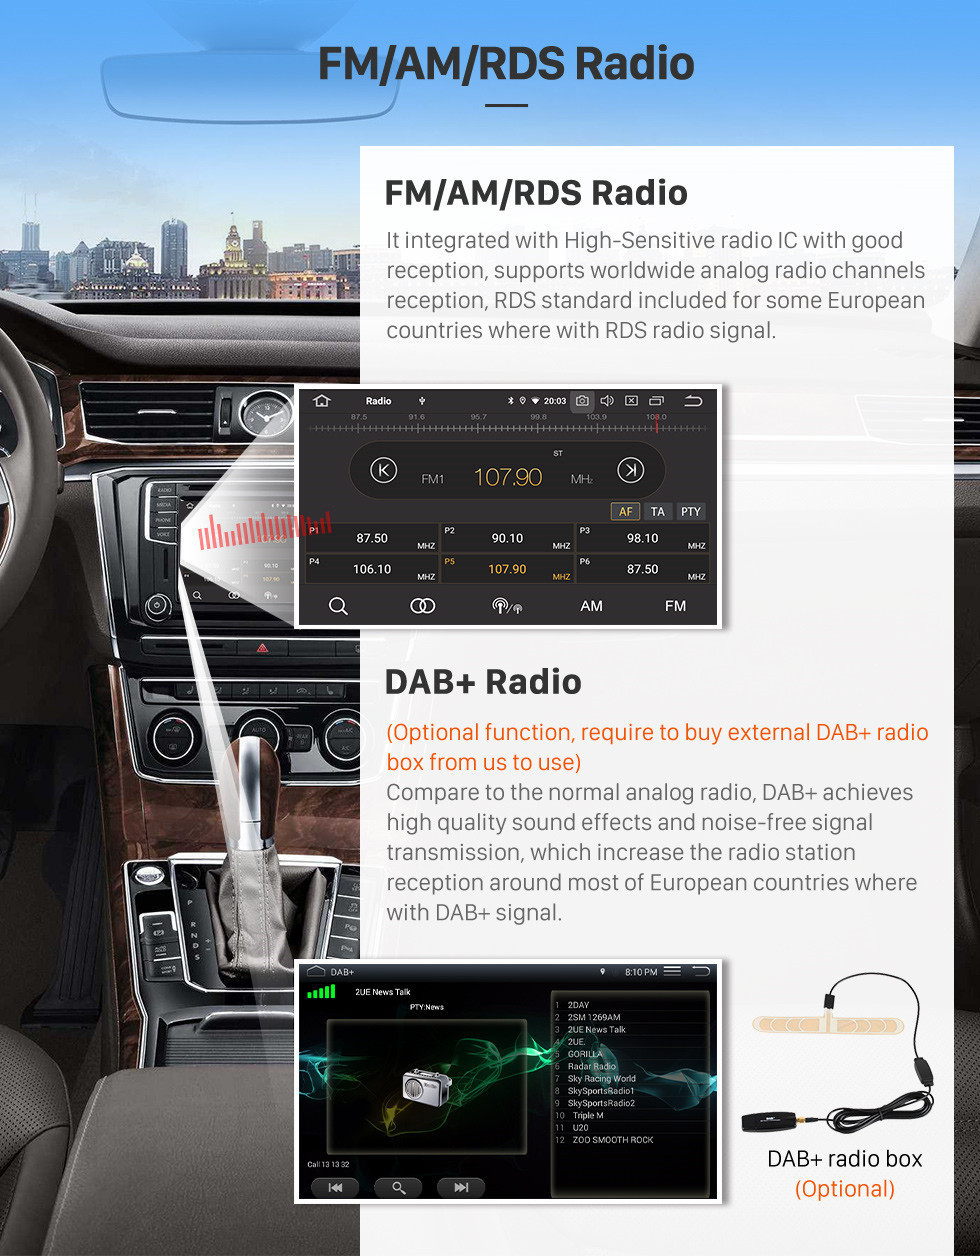 Seicane 9 inch Android 11.0 2018-2019 chevy Chevrolet Daewoo Matiz/ Spark/ Baic/ Beat HD Touchscreen GPS Navigation Radio with Carplay Bluetooth support 4G WIFI